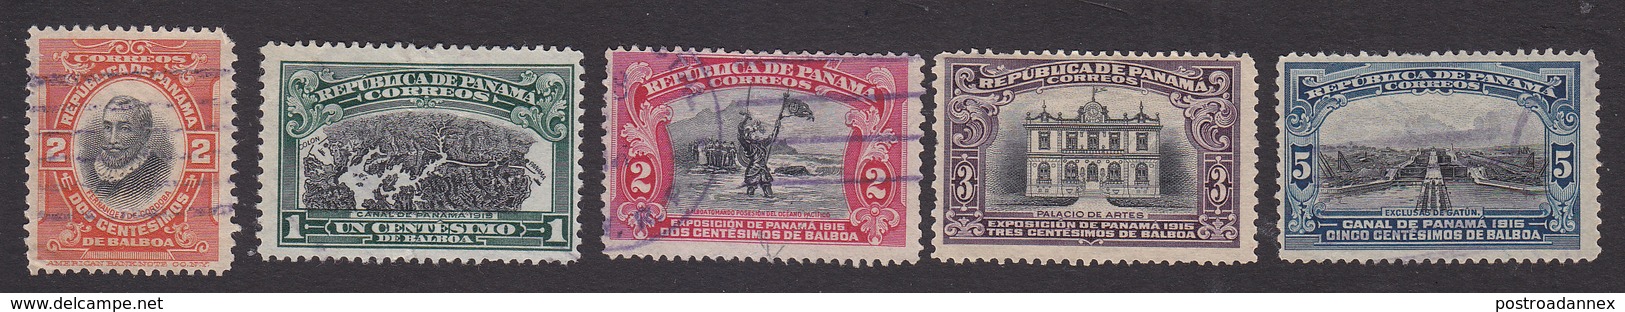 Panama, Scott #198, 205-206, 209-210, Used, Cordoba, Map, Balboa, Palace Of Arts, Gatun Locks, Issued 1909-15 - Panama